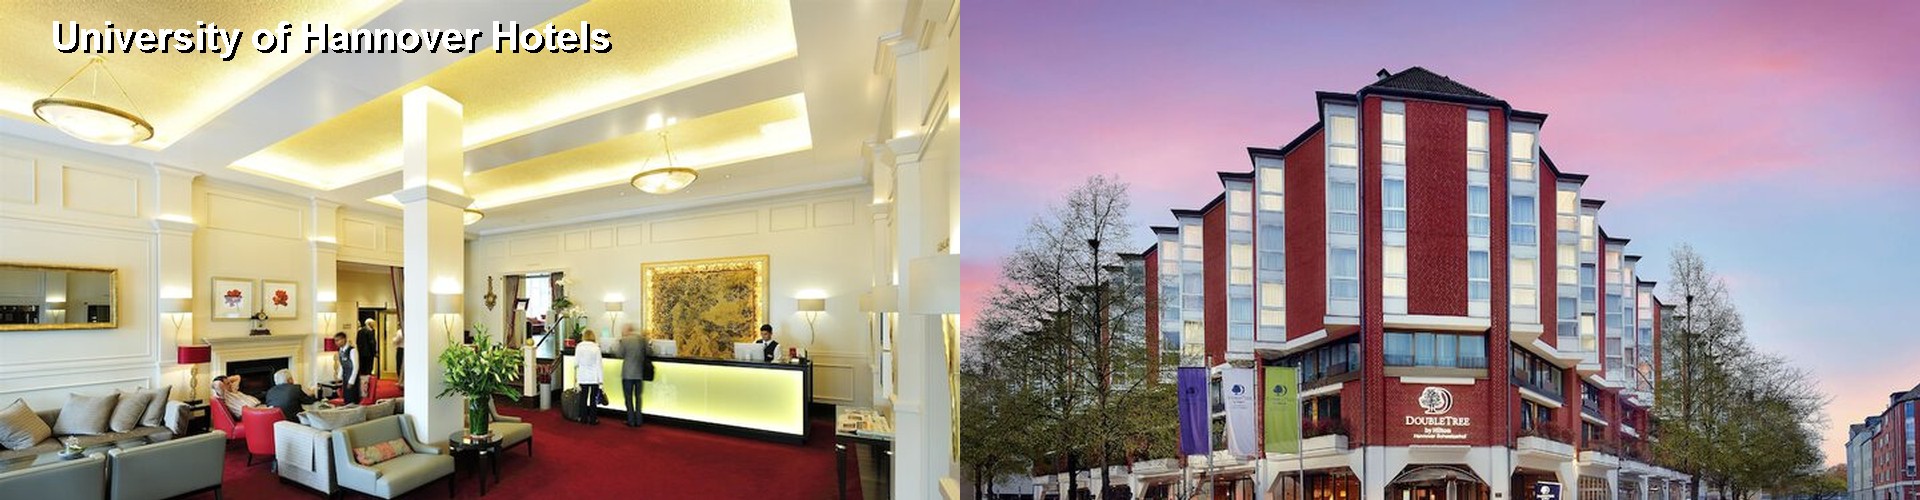 5 Best Hotels near University of Hannover